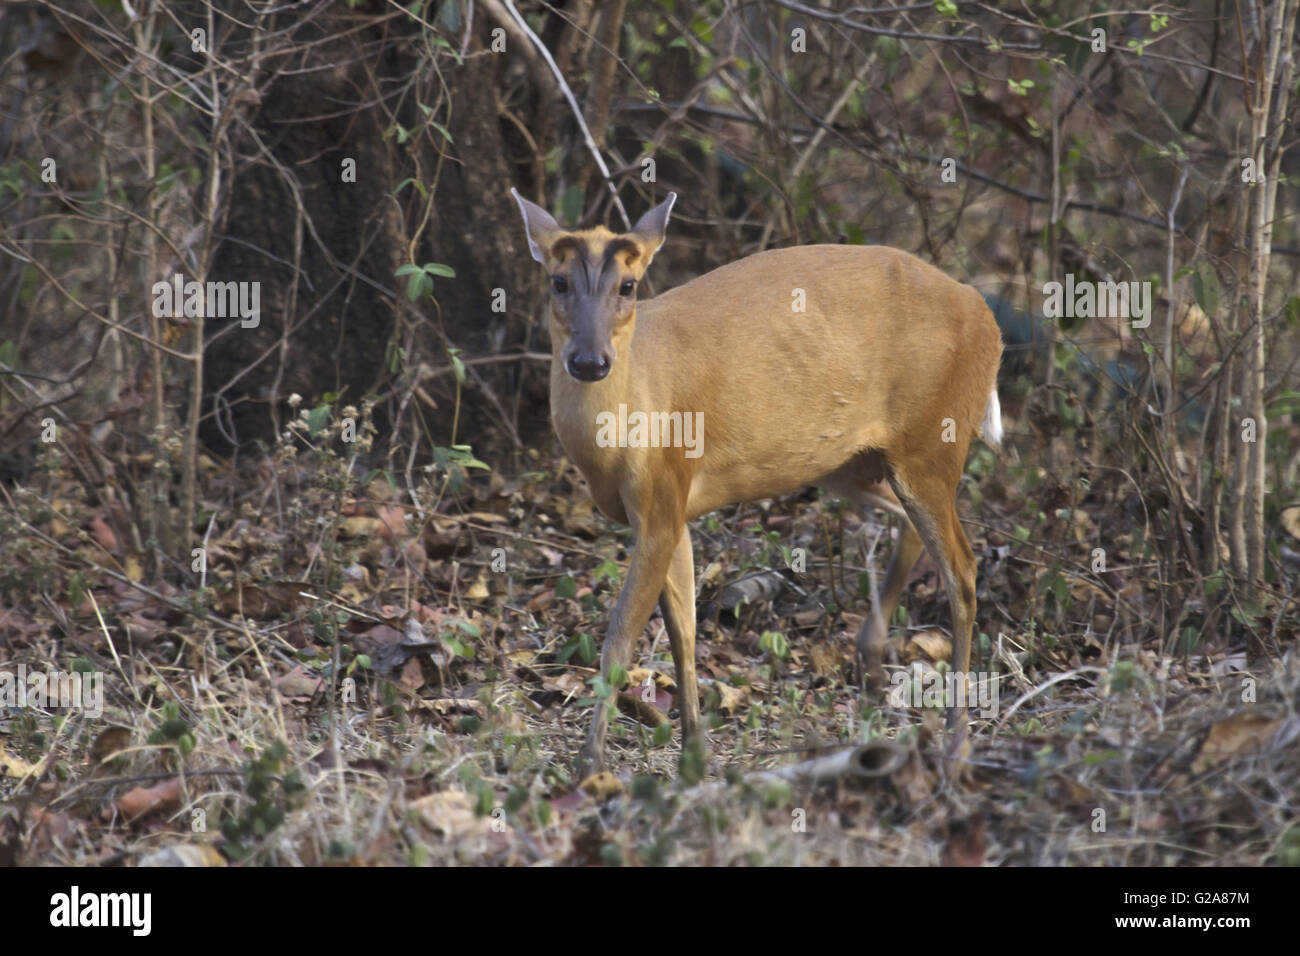 Indian muntjac or Barking Deer. Kanha Tiger Reserve, Madhya Pradesh, India Stock Photo